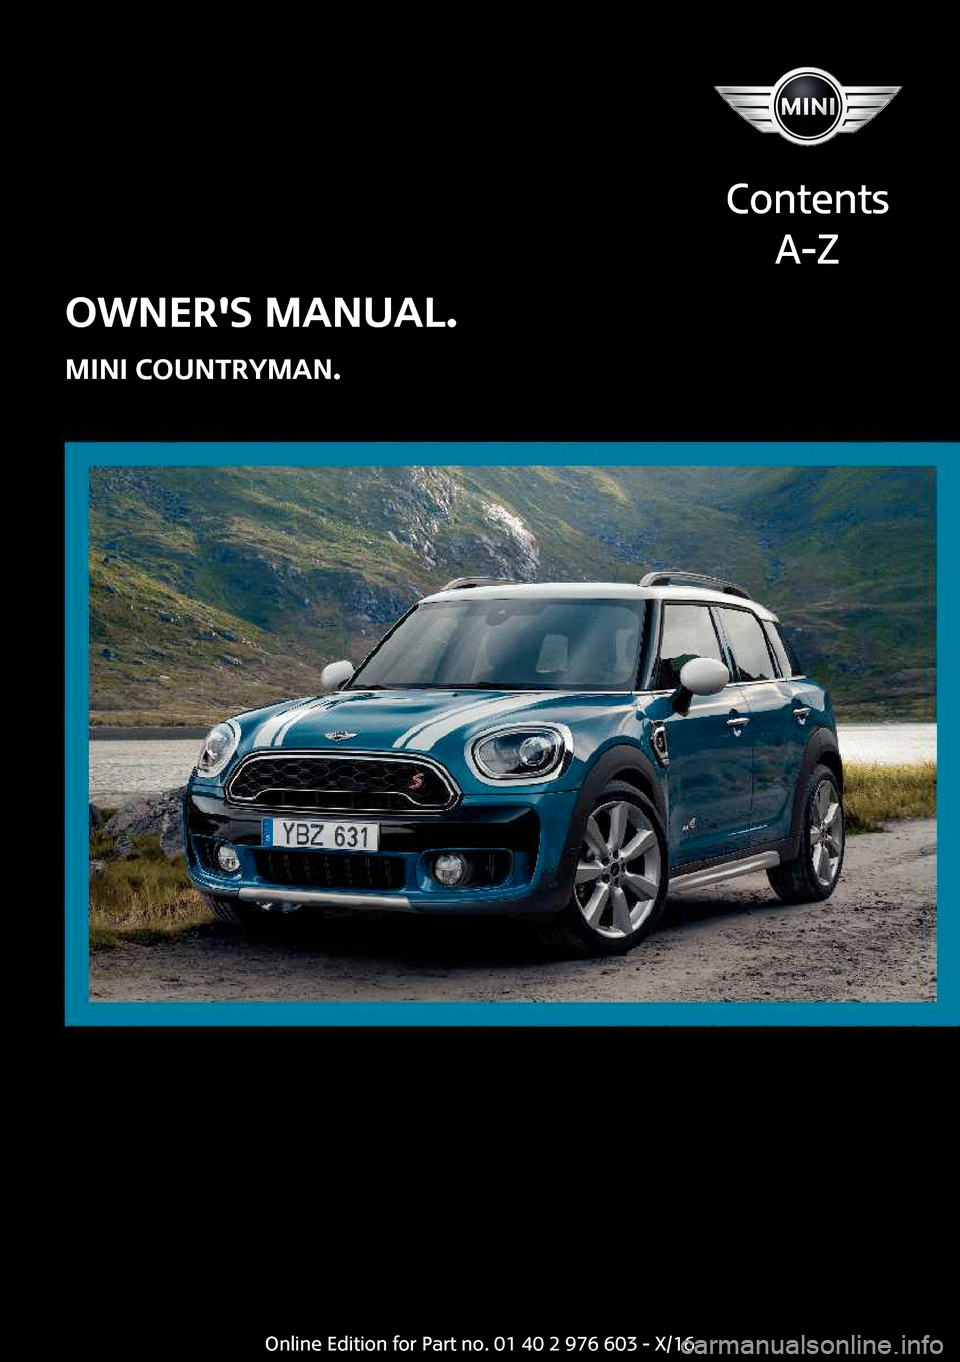 MINI Countryman 2017  Owners Manual �O�W�N�E�R��S��M�A�N�U�A�L�.
�M�I�N�I��C�O�U�N�T�R�Y�M�A�N�.
�C�o�n�t�e�n�t�s �A�-�Z�O�n�l�i�n�e� �E�d�i�t�i�o�n� �f�o�r� �P�a�r�t� �n�o�.� �0�1� �4�0� �2� �9�7�6� �6�0�3� �-� �X�/�1�6  